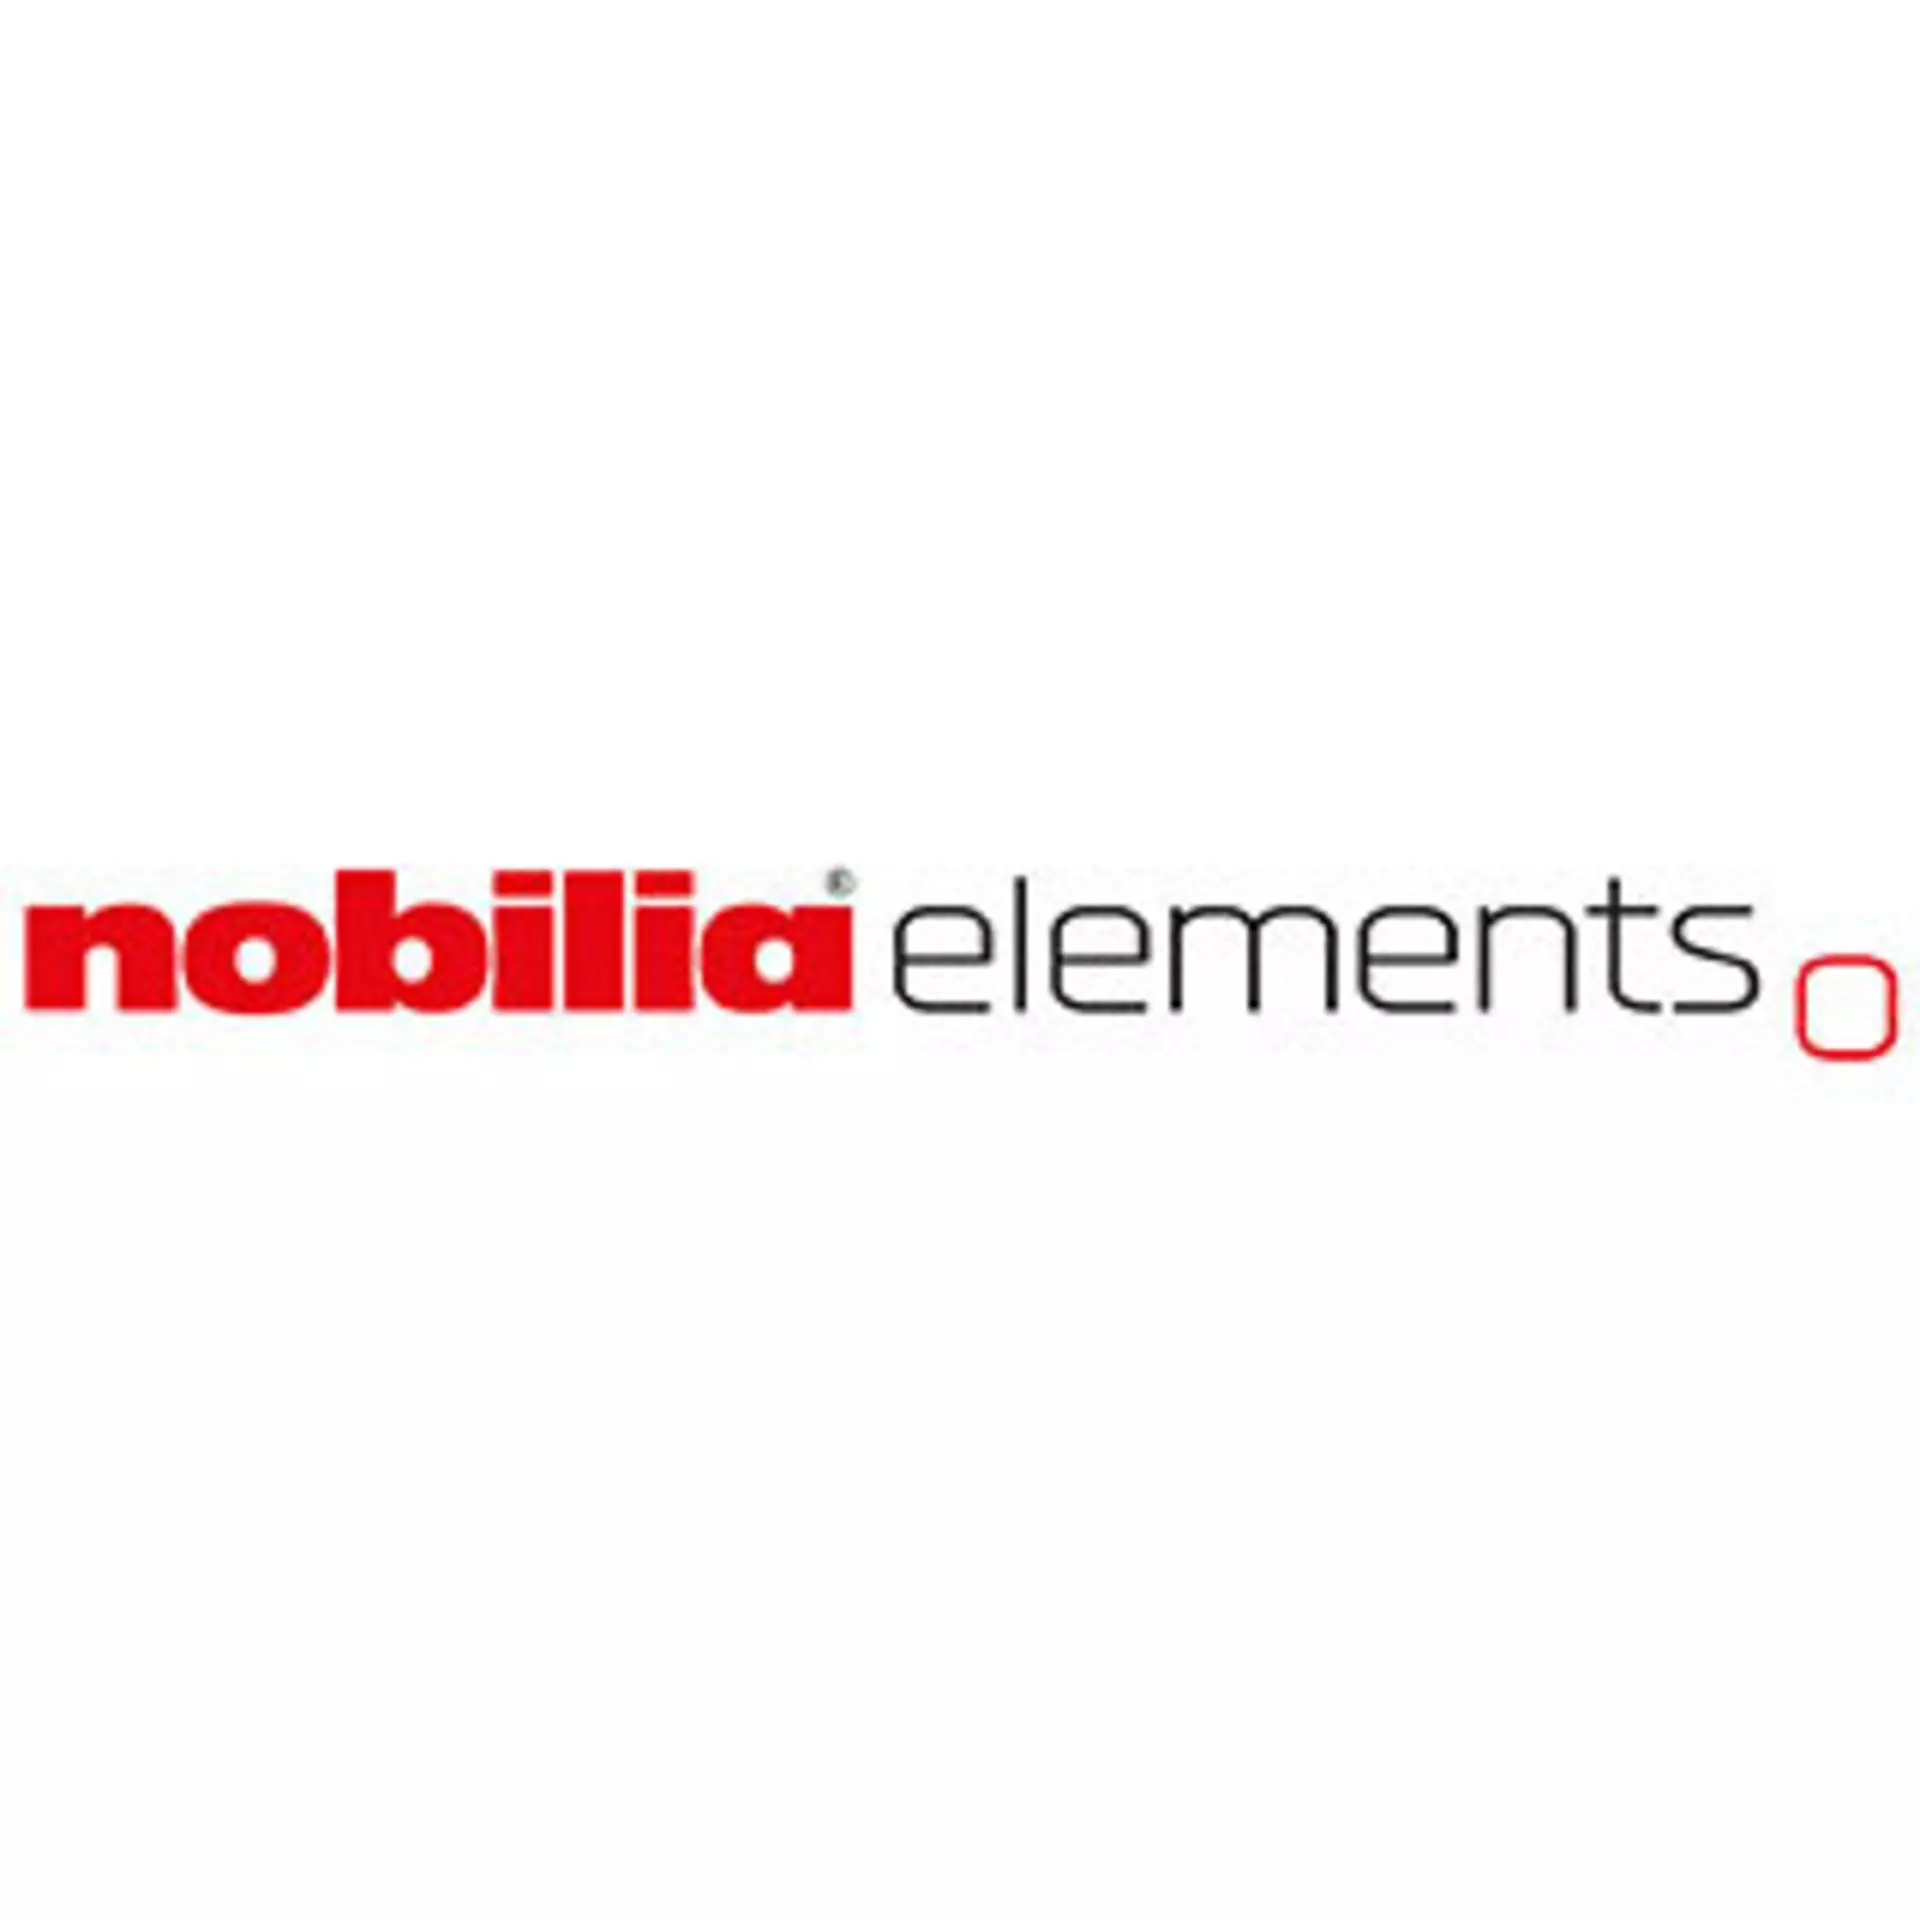 Nobilia Elements